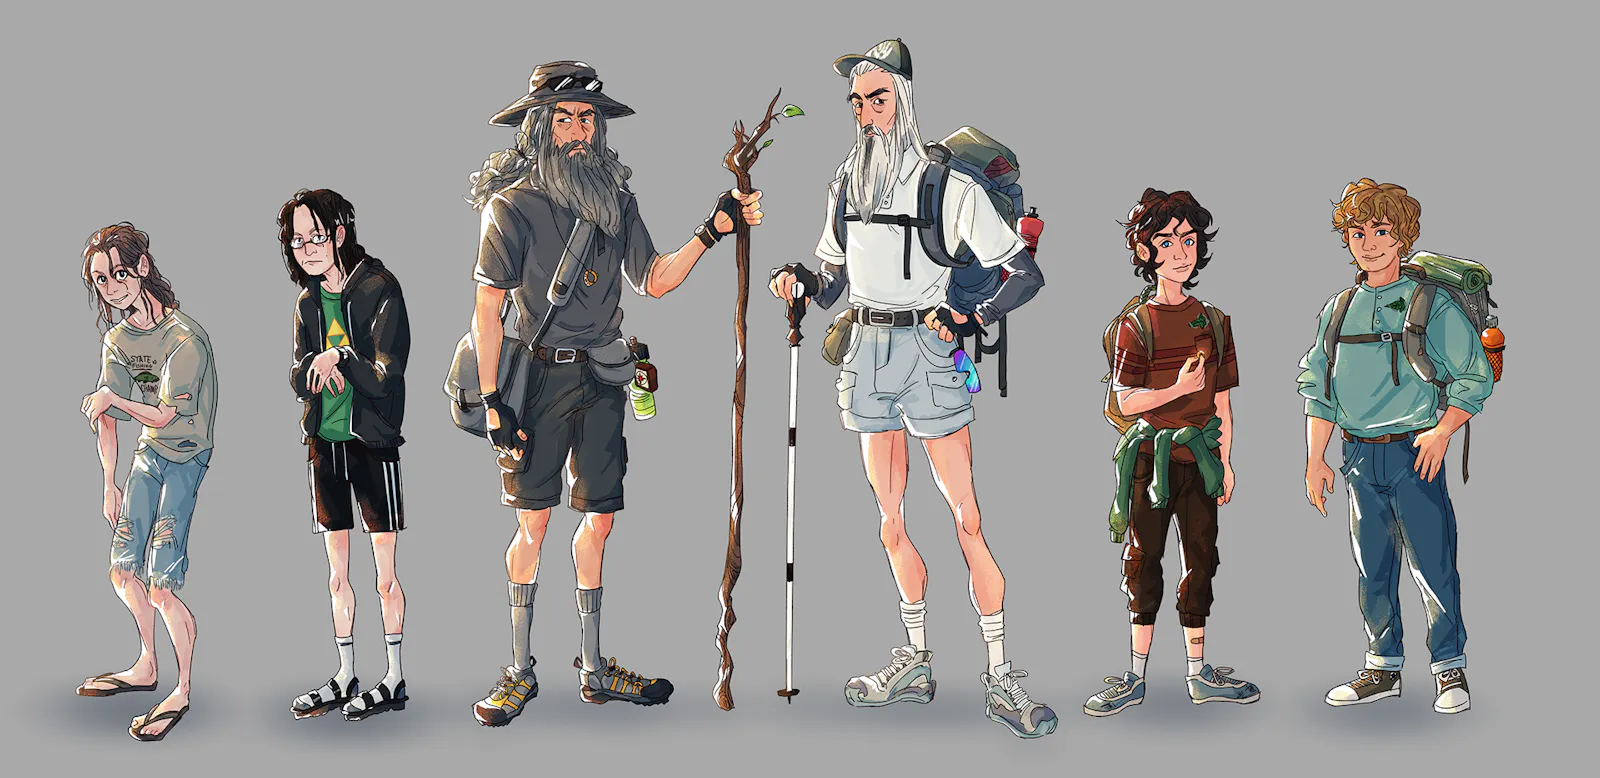 LotR characters in camp - design (c) by Lucas Prokopowich